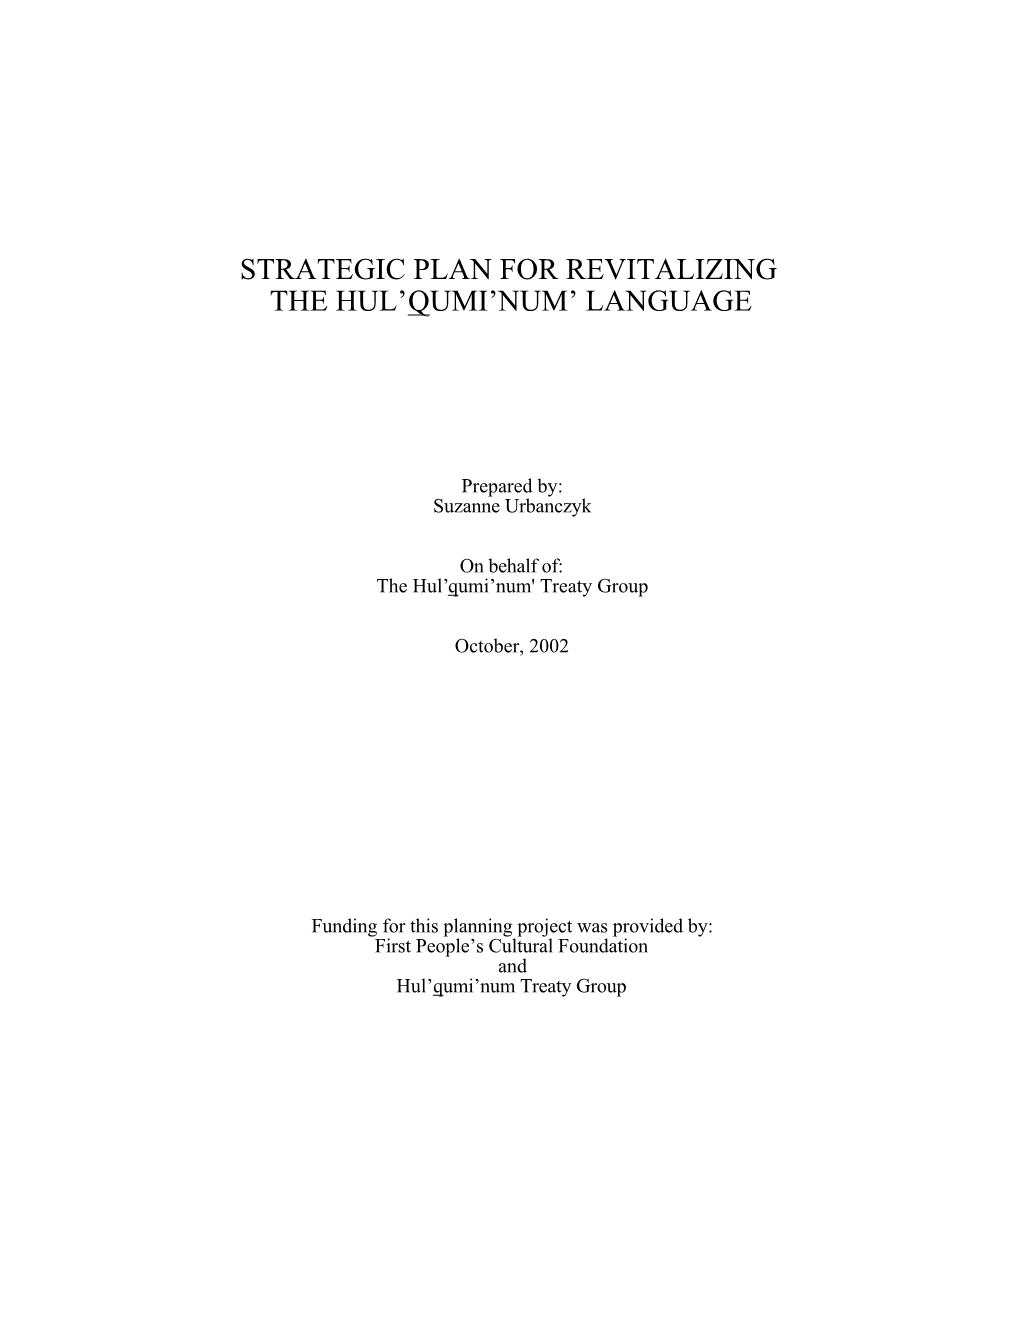 Strategic Plan for Revitalizing the Hul'qumi